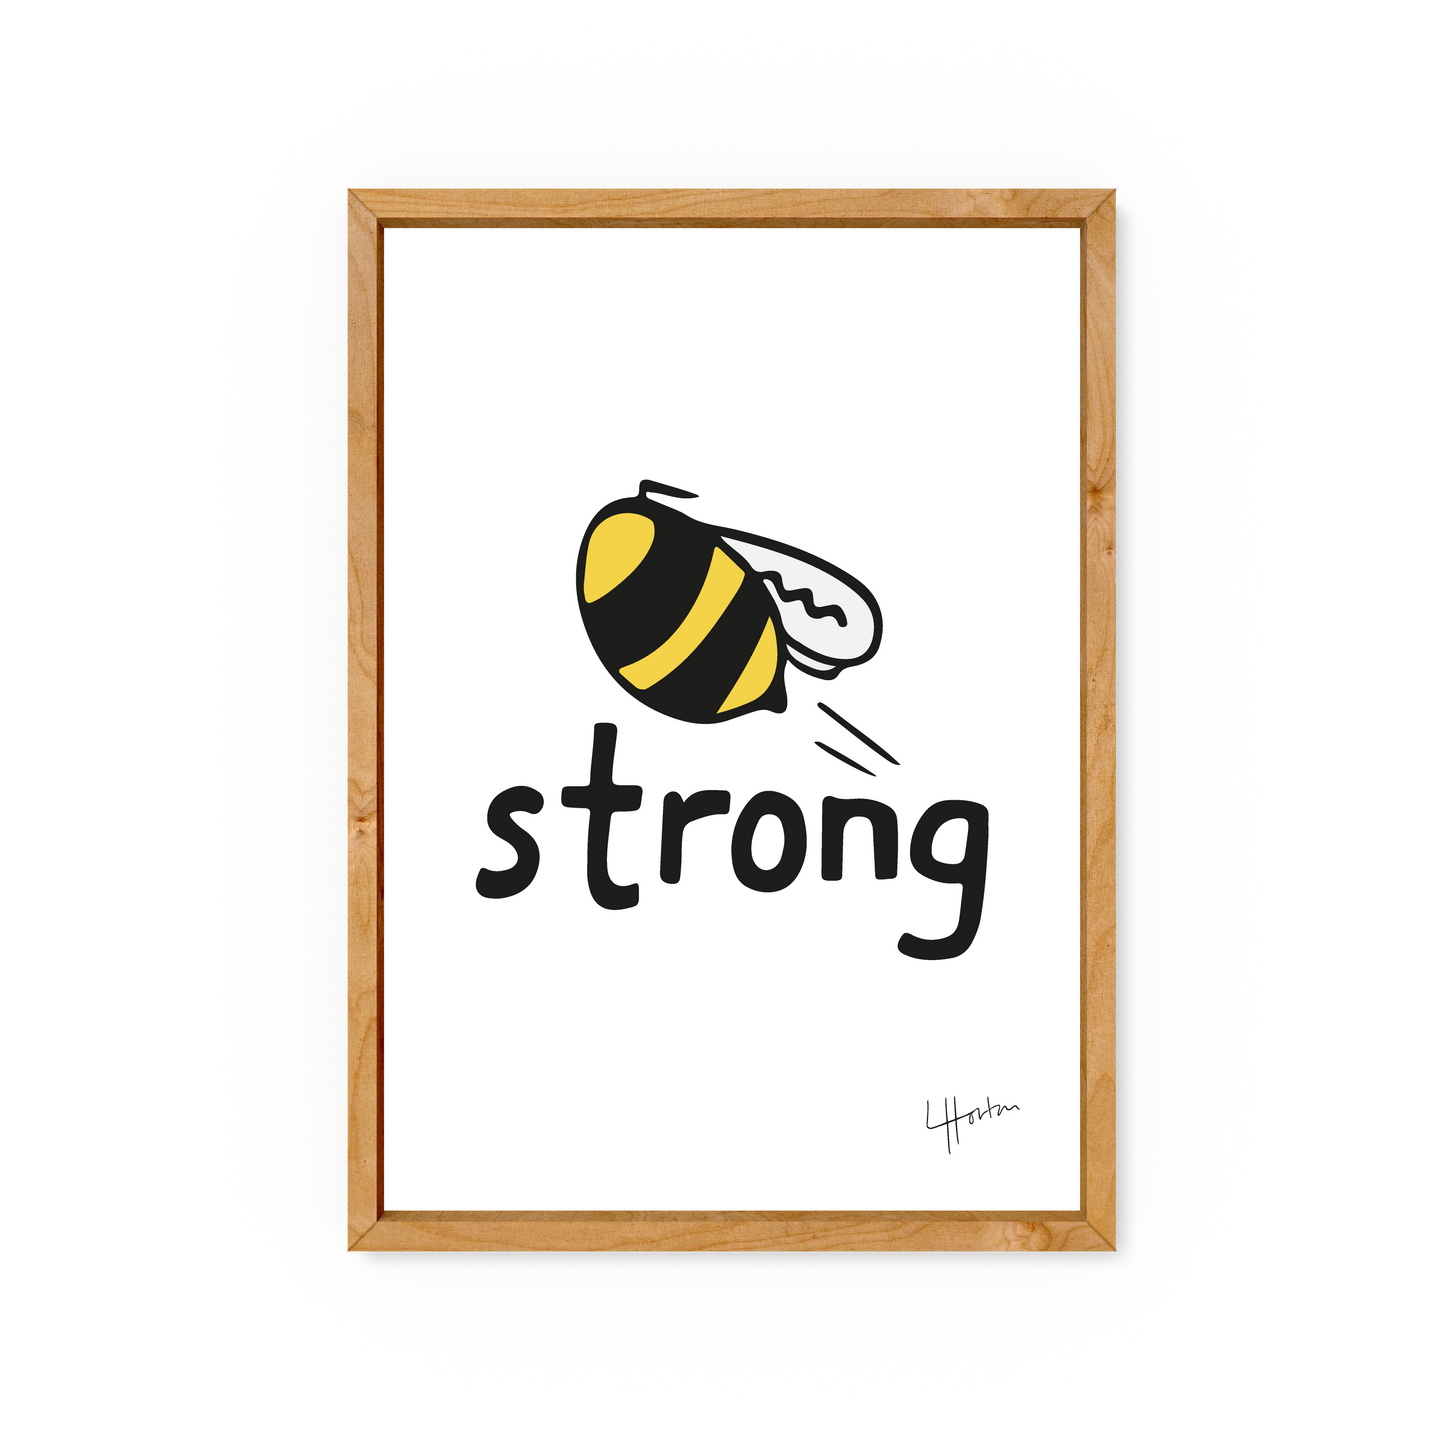 Be Strong - Wellbeing Art Print - Luke Horton